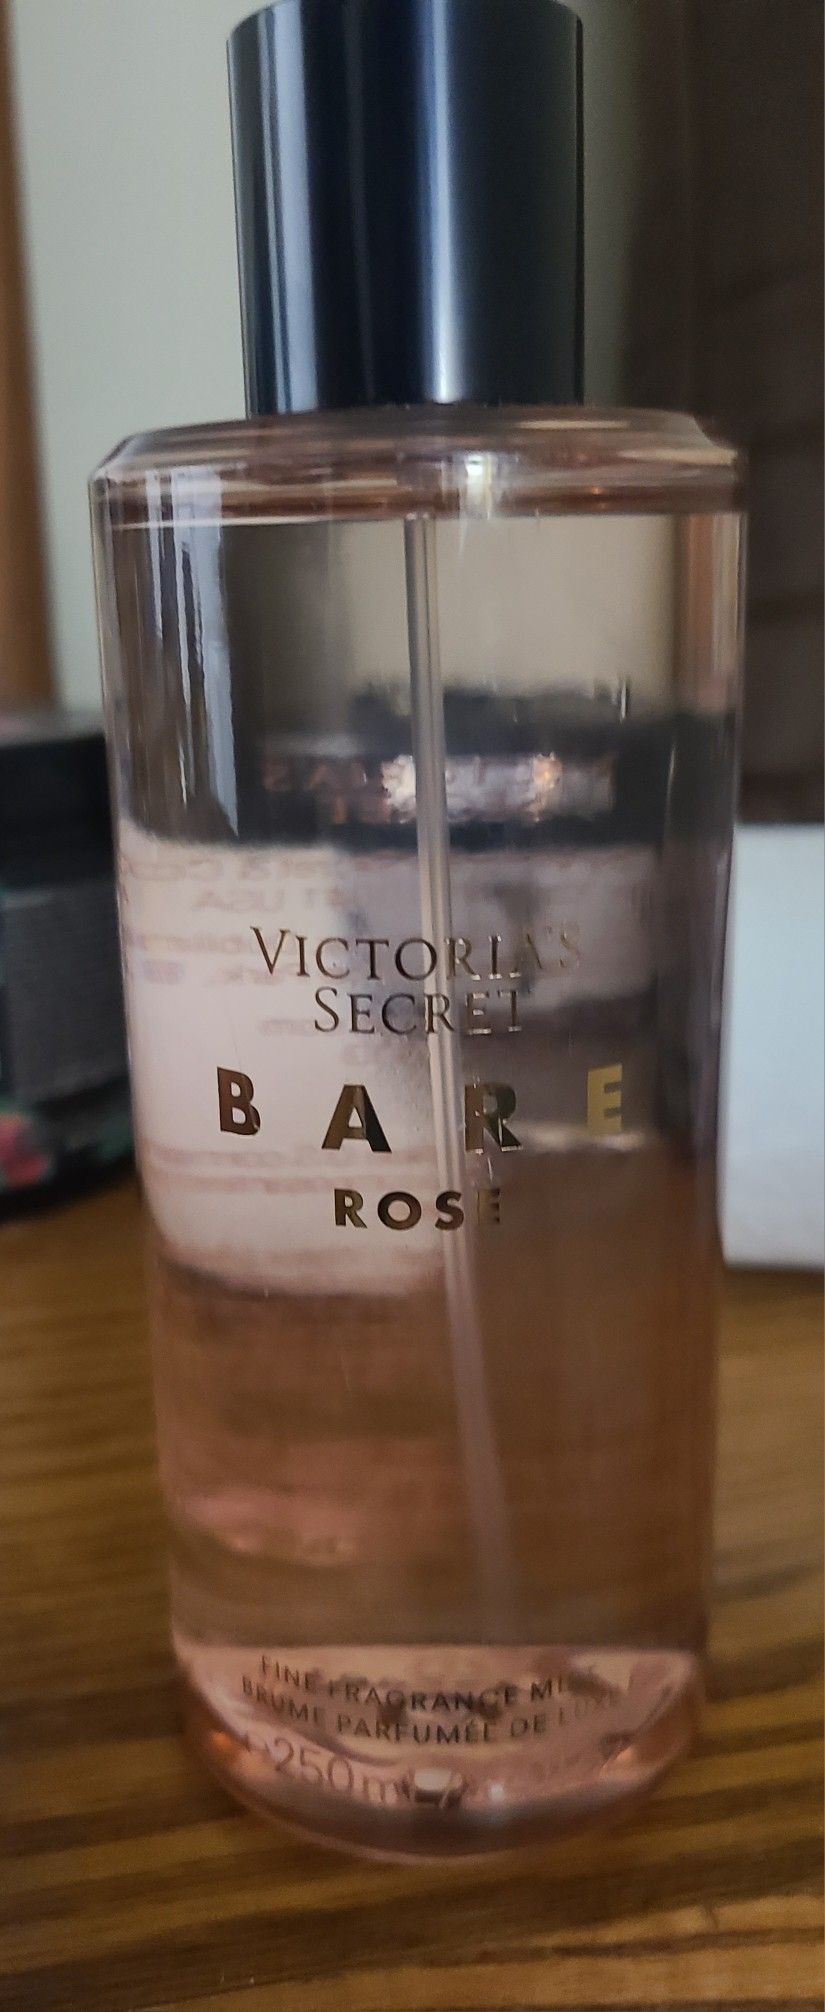 Victoria Secret Bare Rose $12